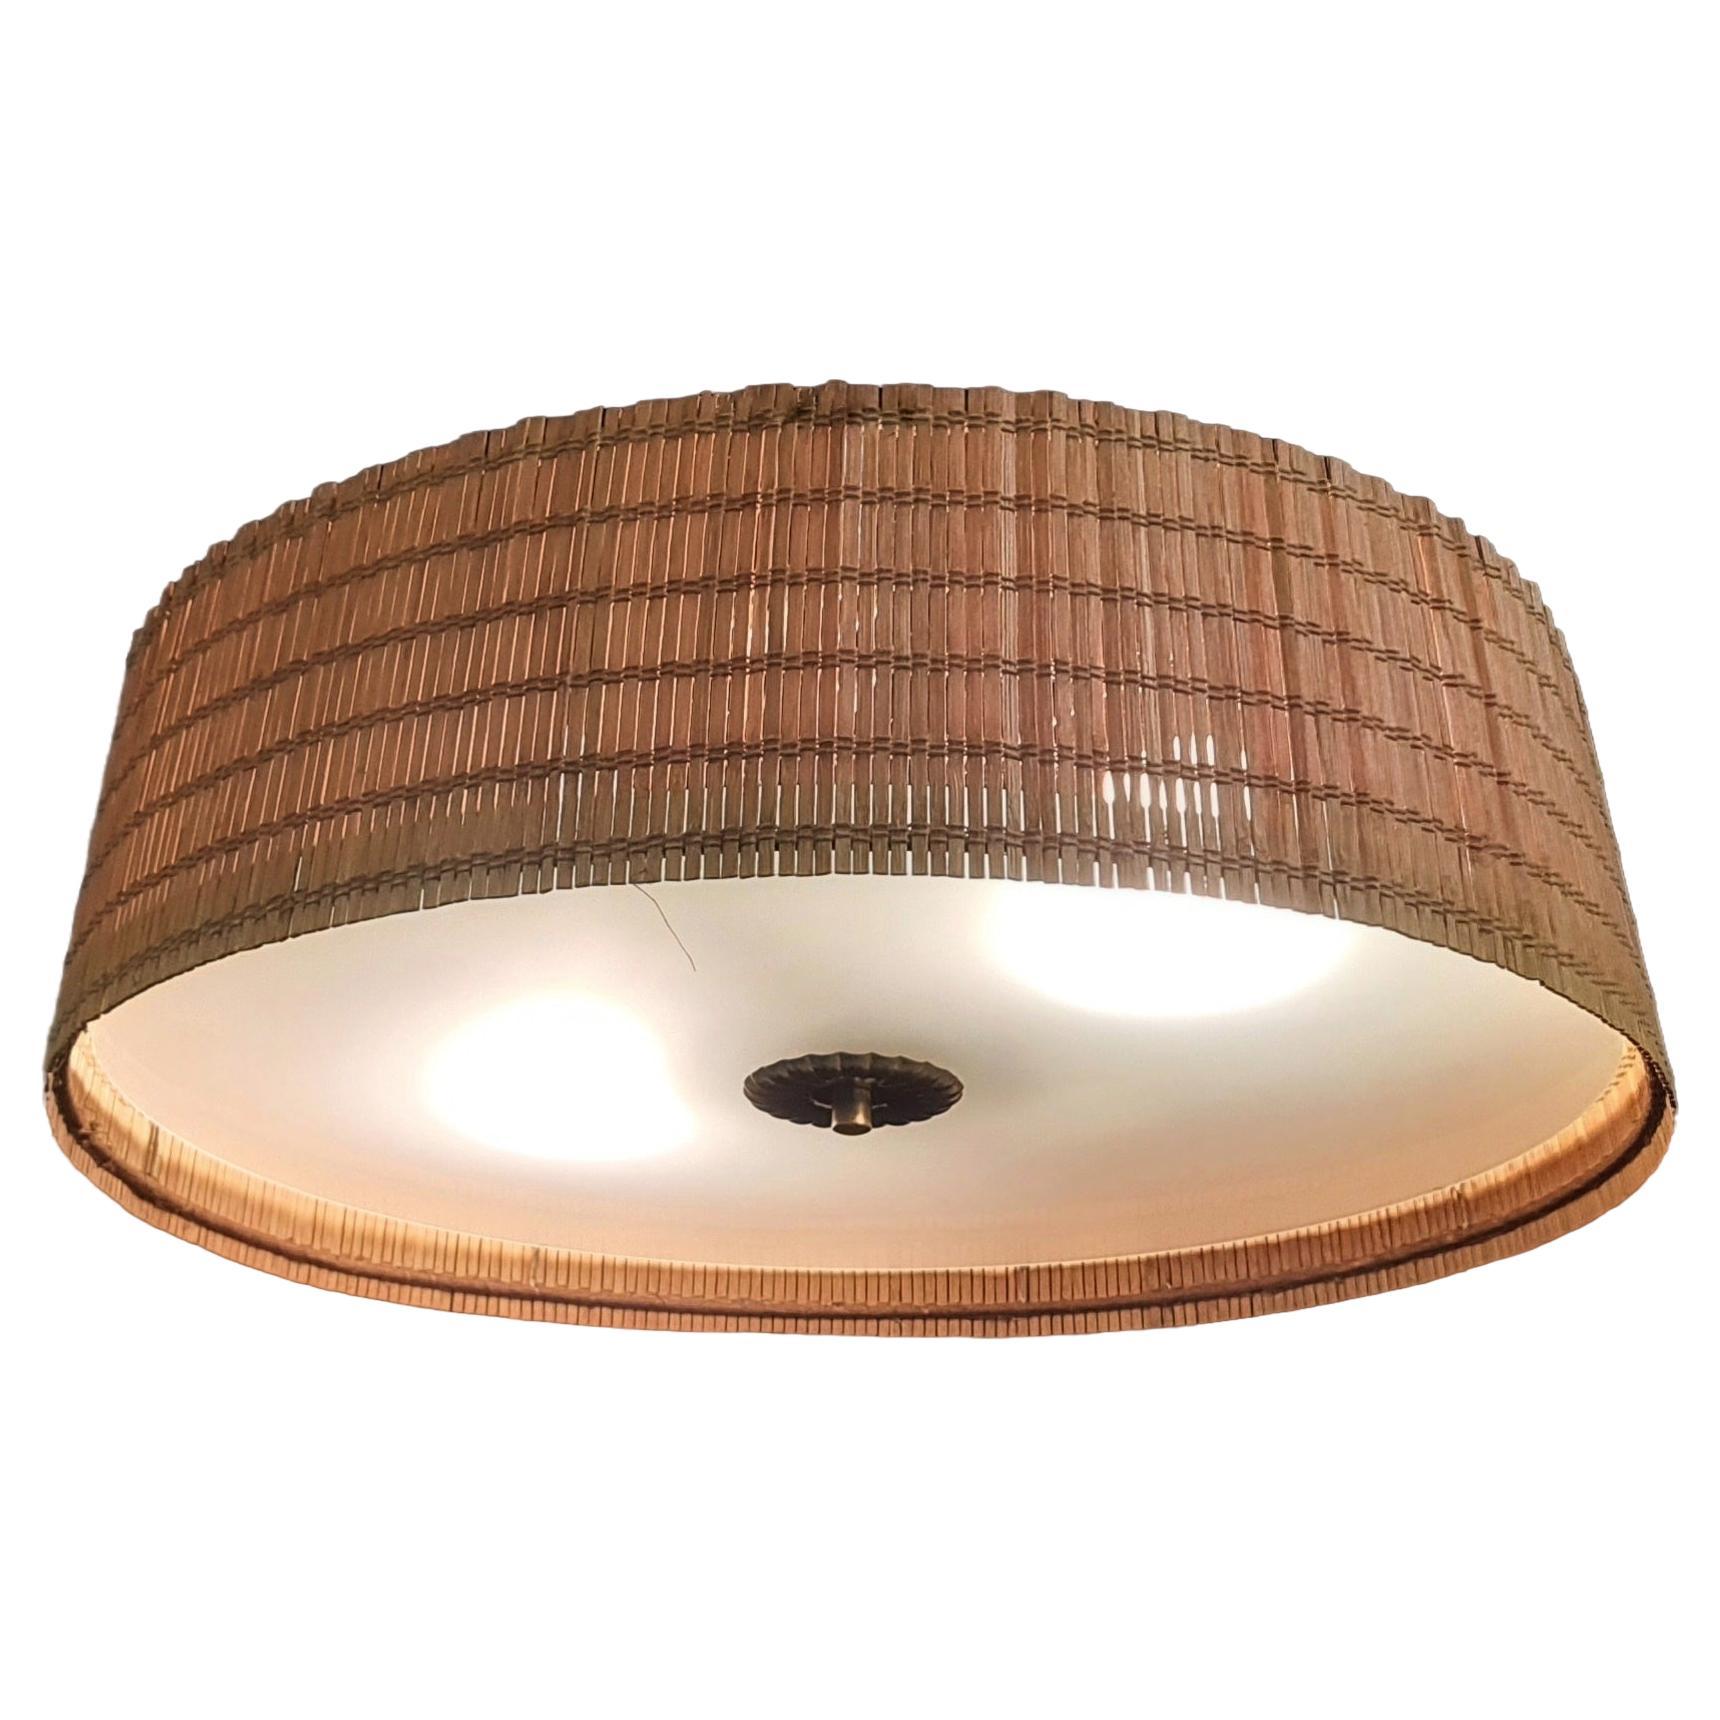 Gunnel Nyman Ceiling Lamp Model 20491 for Idman For Sale